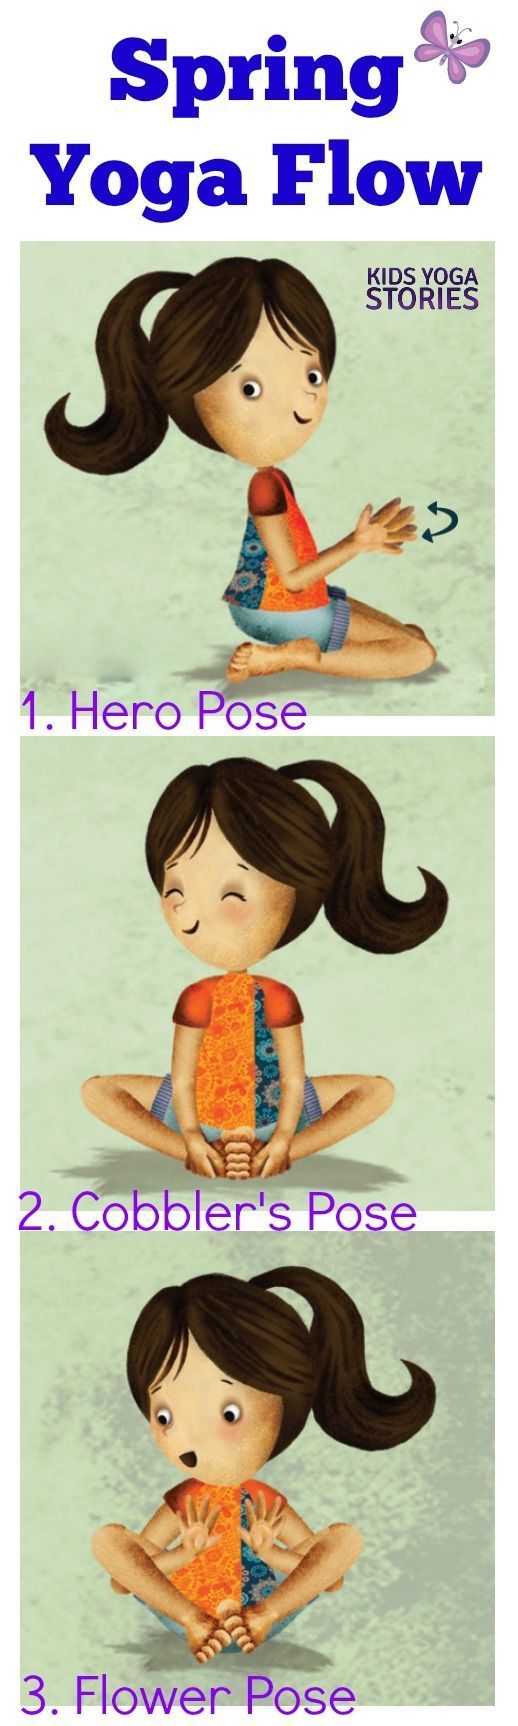 Spring 3-yoga pose flow | Kids Yoga Stories